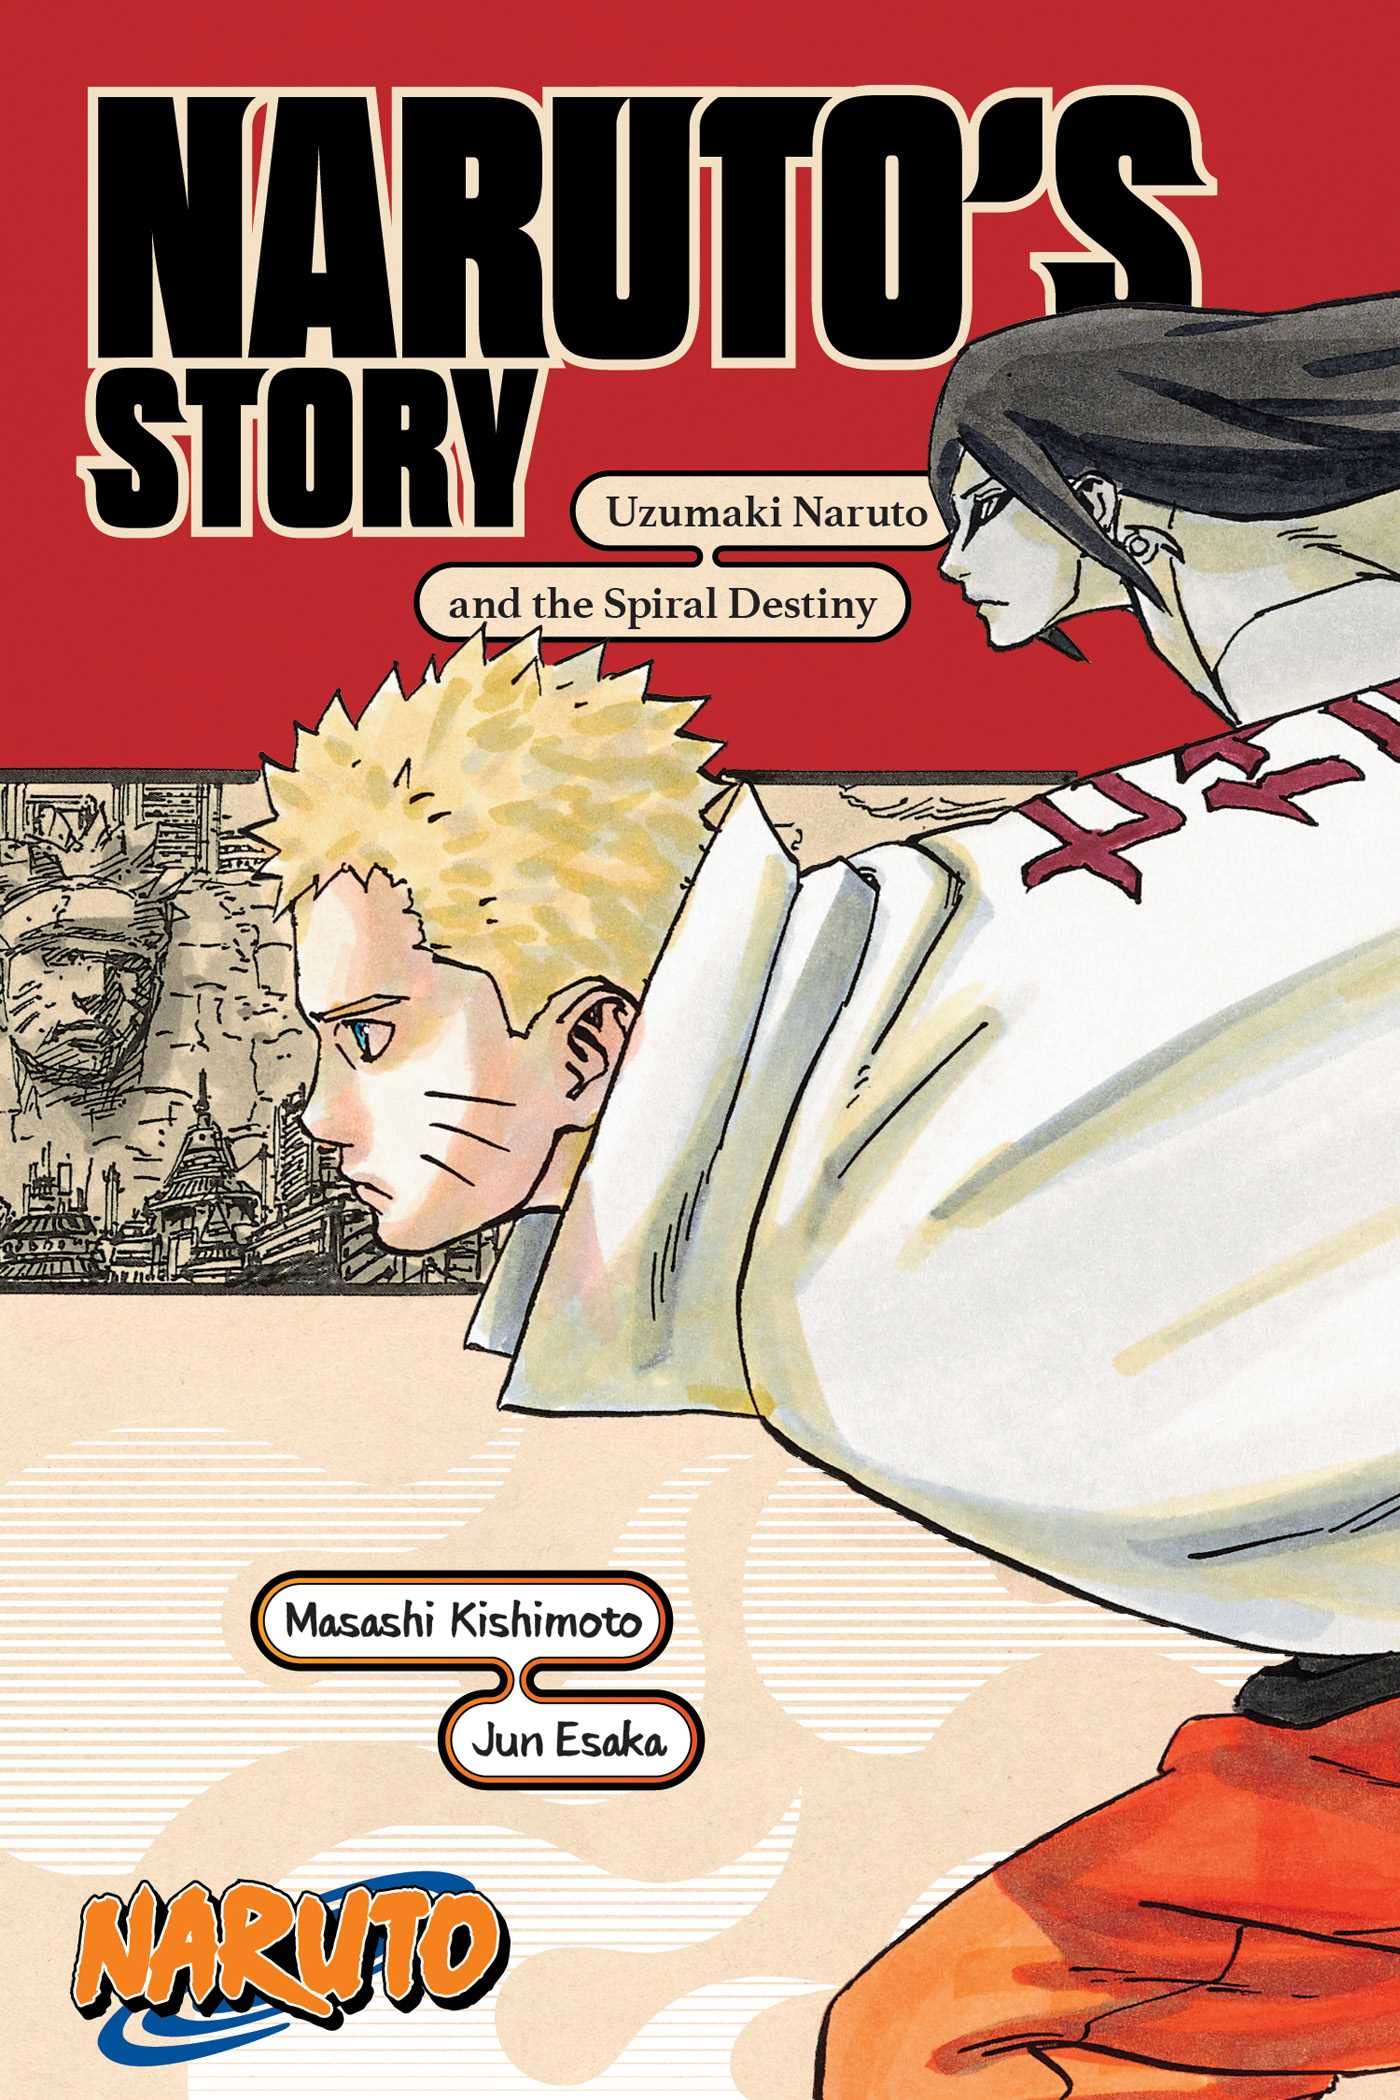 Naruto's Story: Uzumaki Naruto and the Spiral Destiny